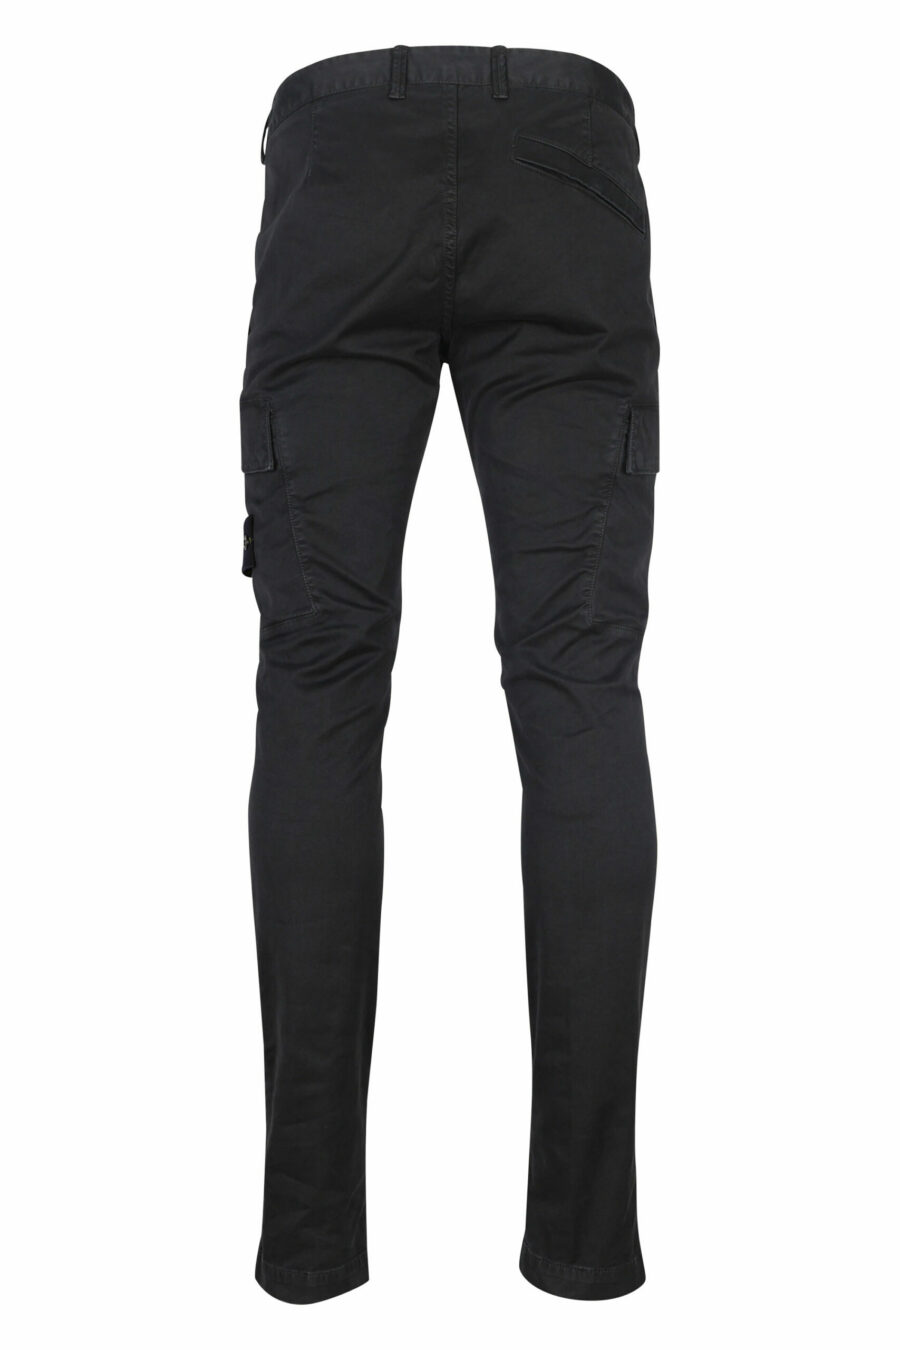 Pantalón negro "skinny" con logo lateral parche - 8052572762253 2 scaled